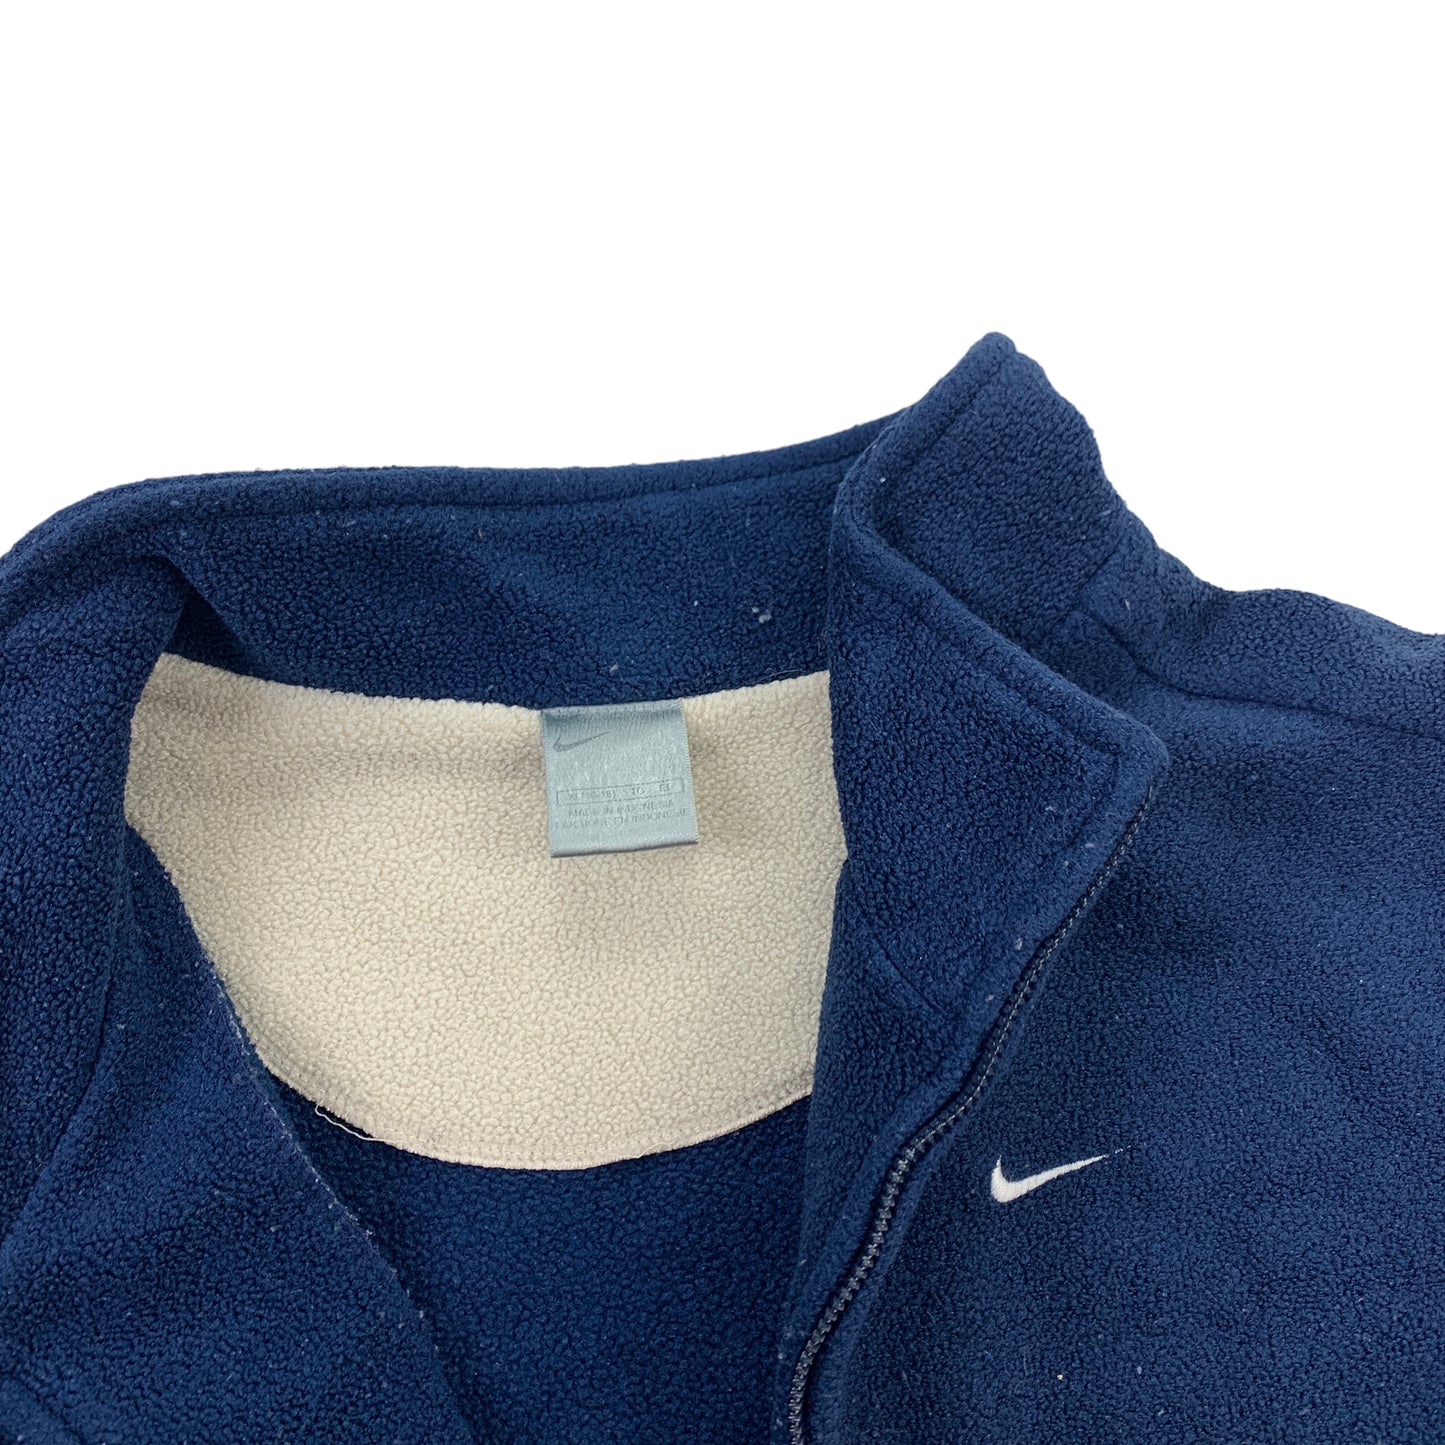 Nike Fleeced Zip Sweater - XL